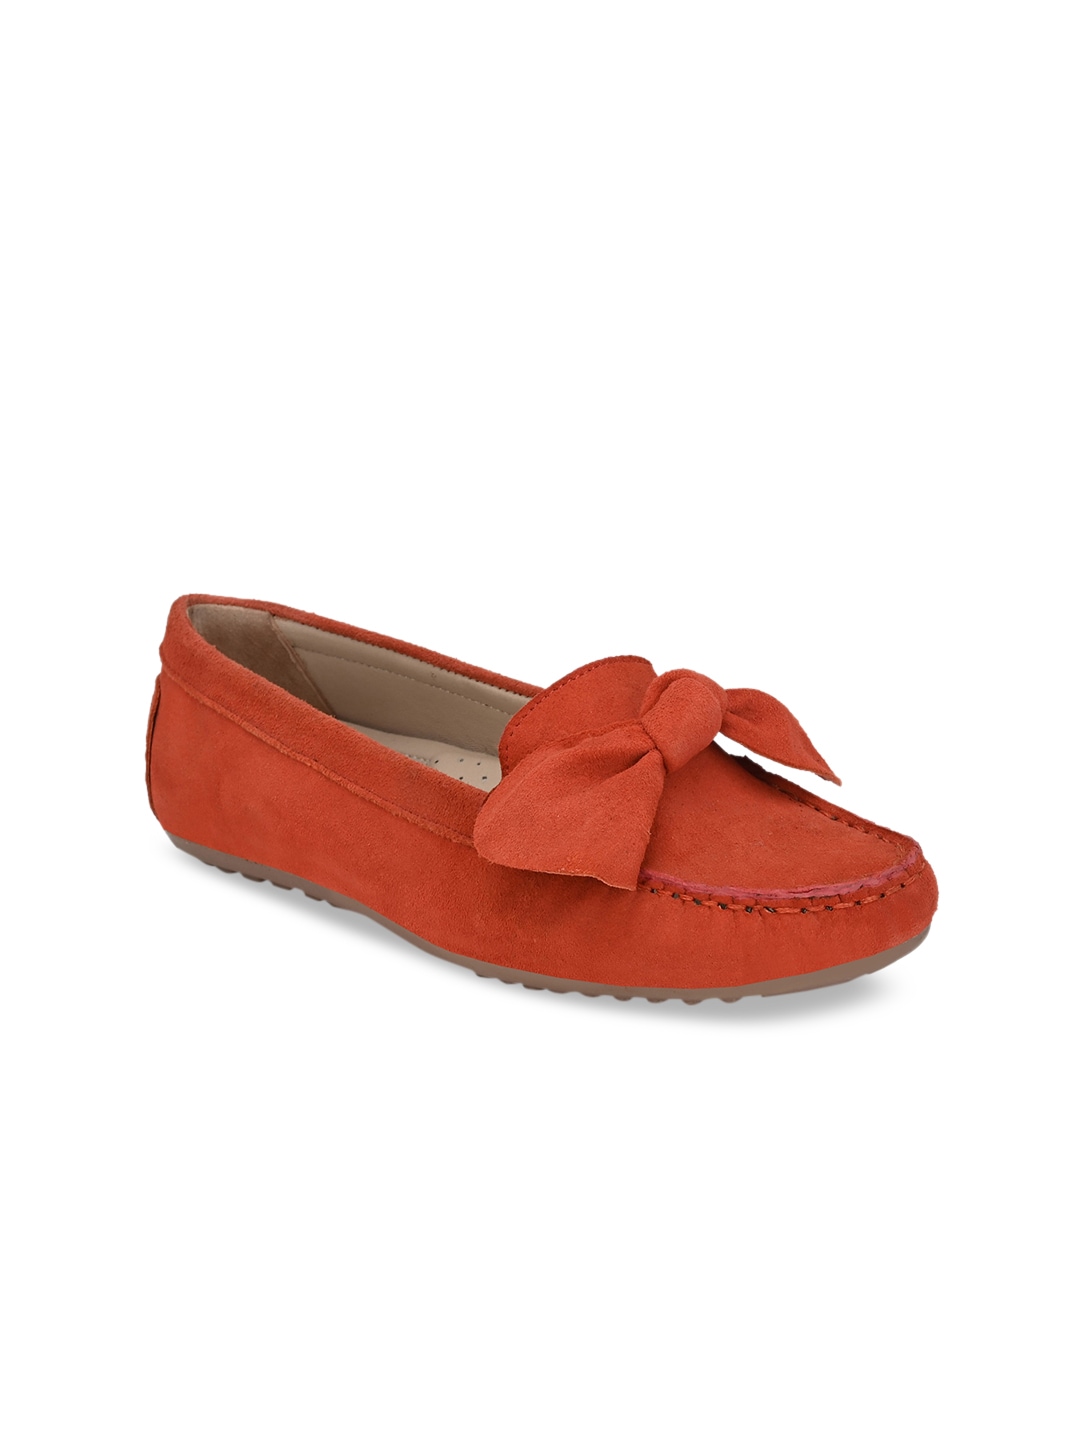 CARLO ROMANO Women Orange Loafers Price in India